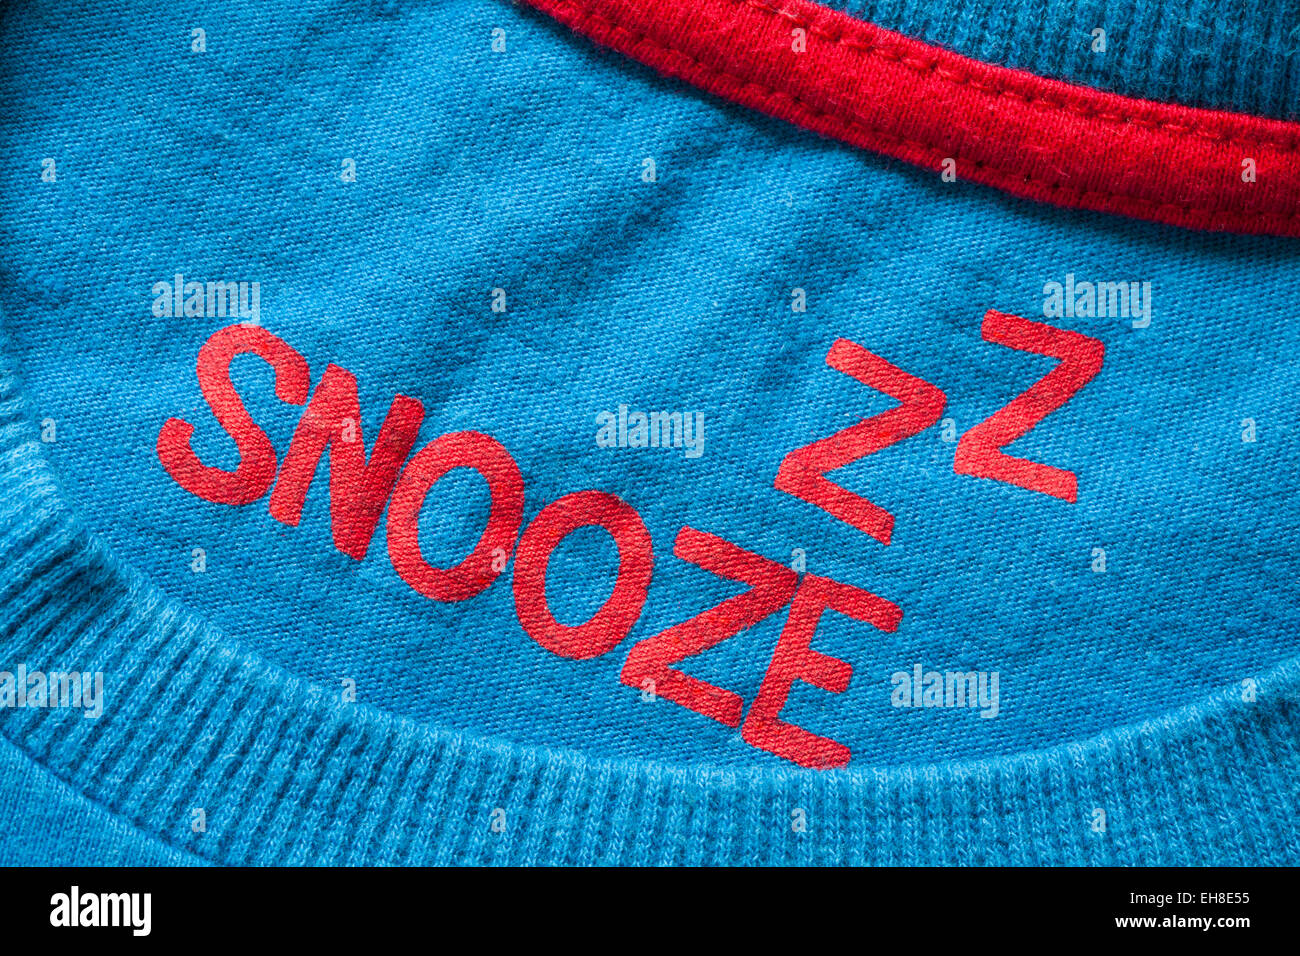 Z Z snooze ZZ stamped in child's top garment, part of pyjamas set Stock Photo